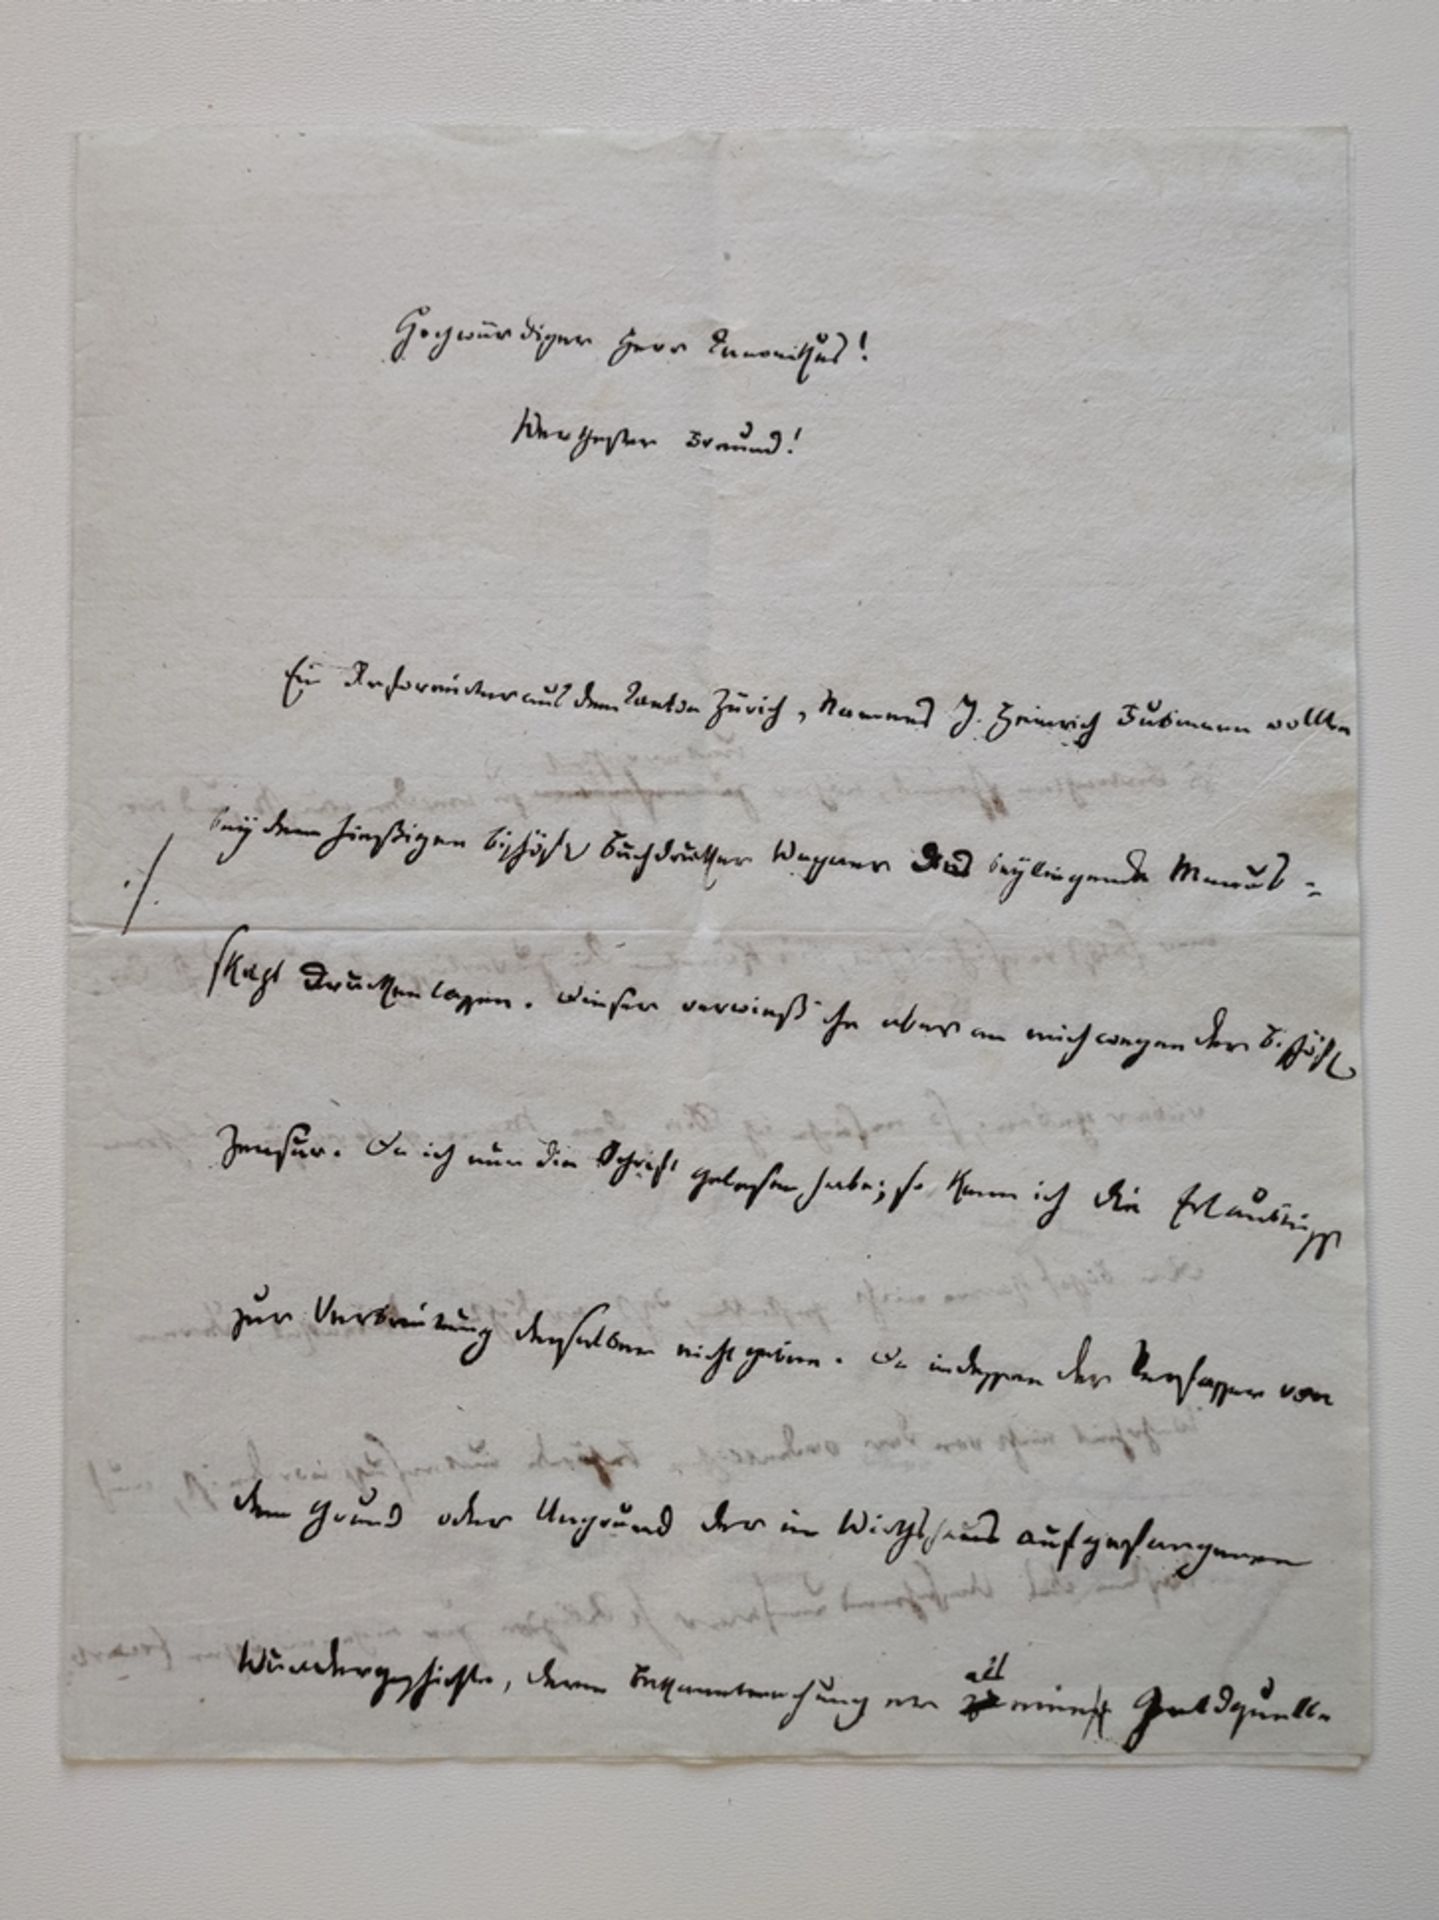 Wessenberg, Ignaz Heinrich (1774 Dresden - 1860 Constance) handwritten, signed letter to Canon J. S